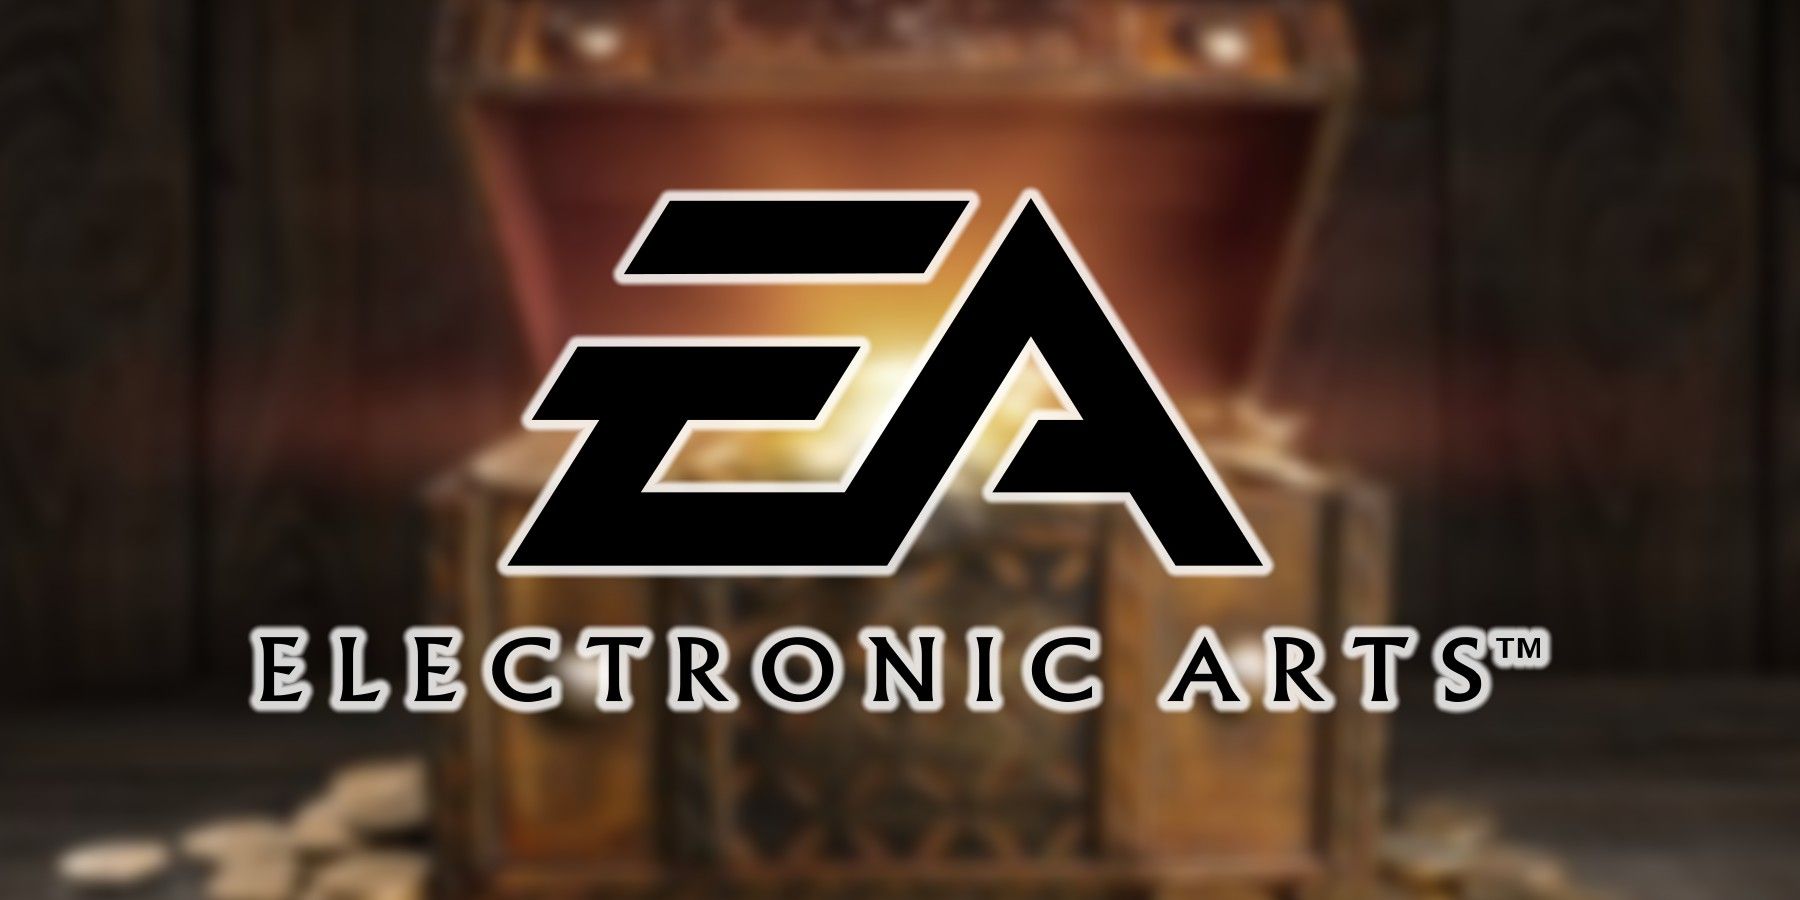 ea-logo-treasure-chest-blurred-background